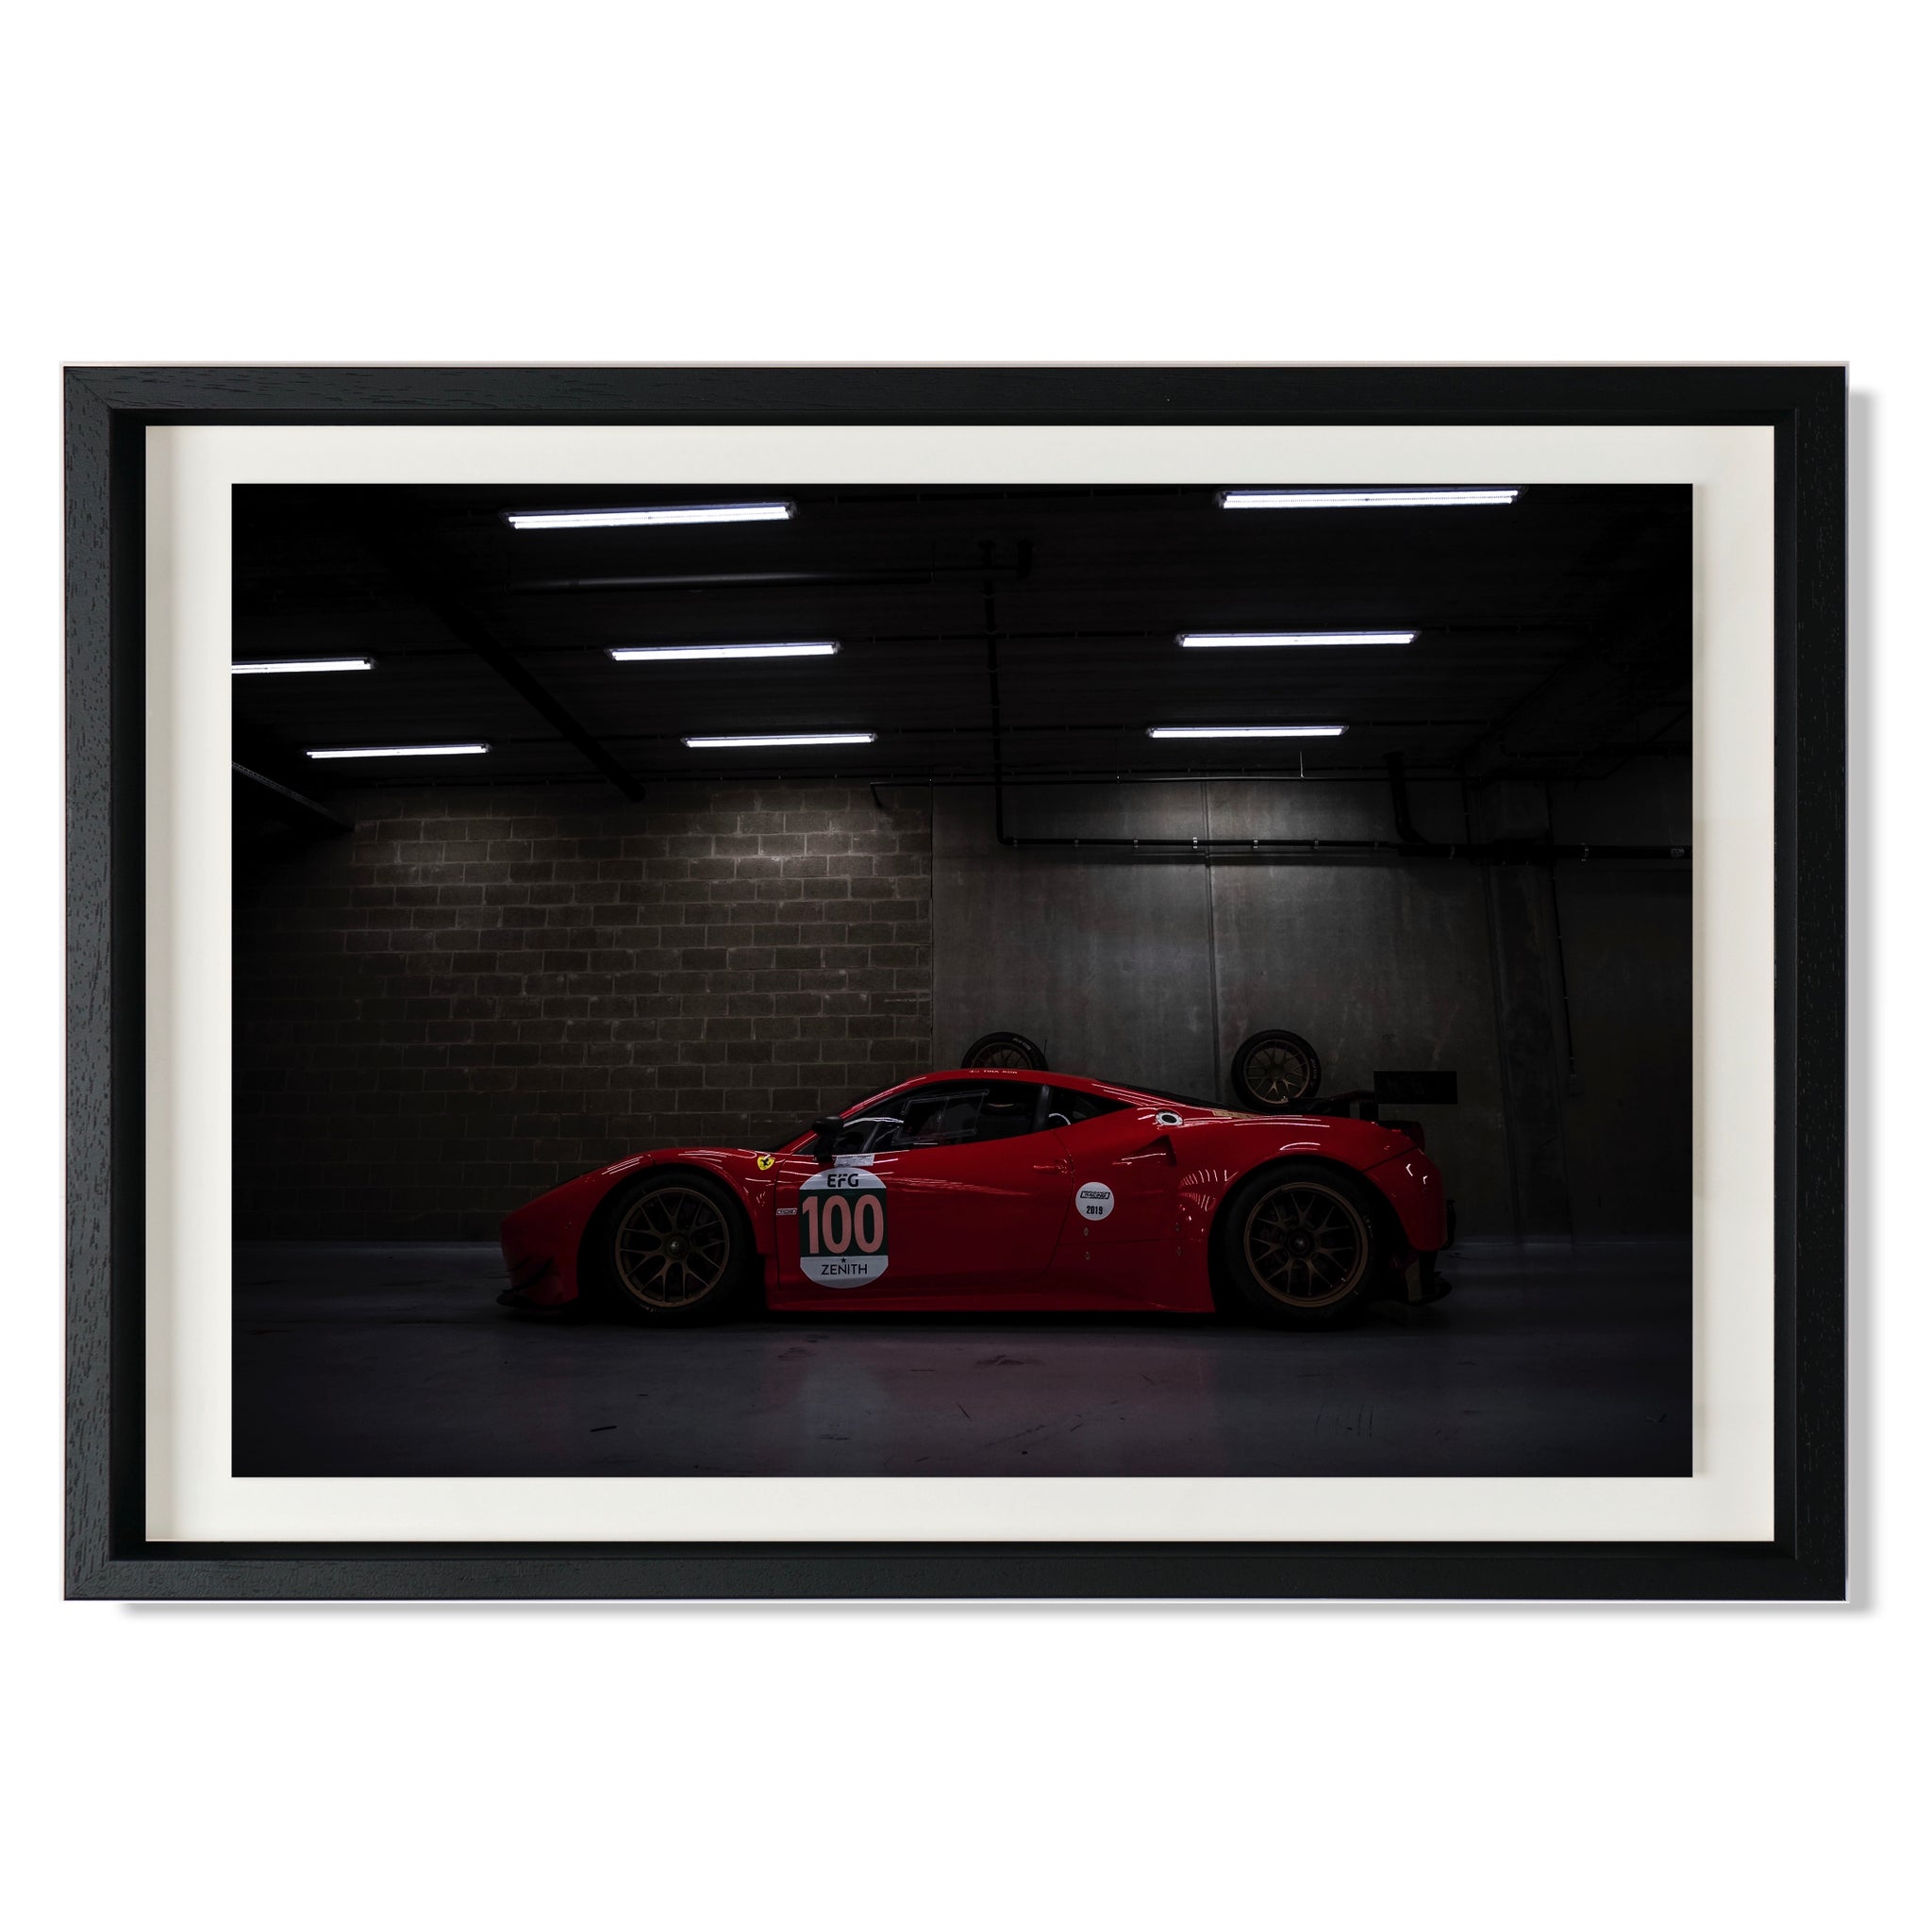 No 100 Ferrari 458 GTE (2011), Endurance Racing Legends, Peter Auto Spa Classic 20191